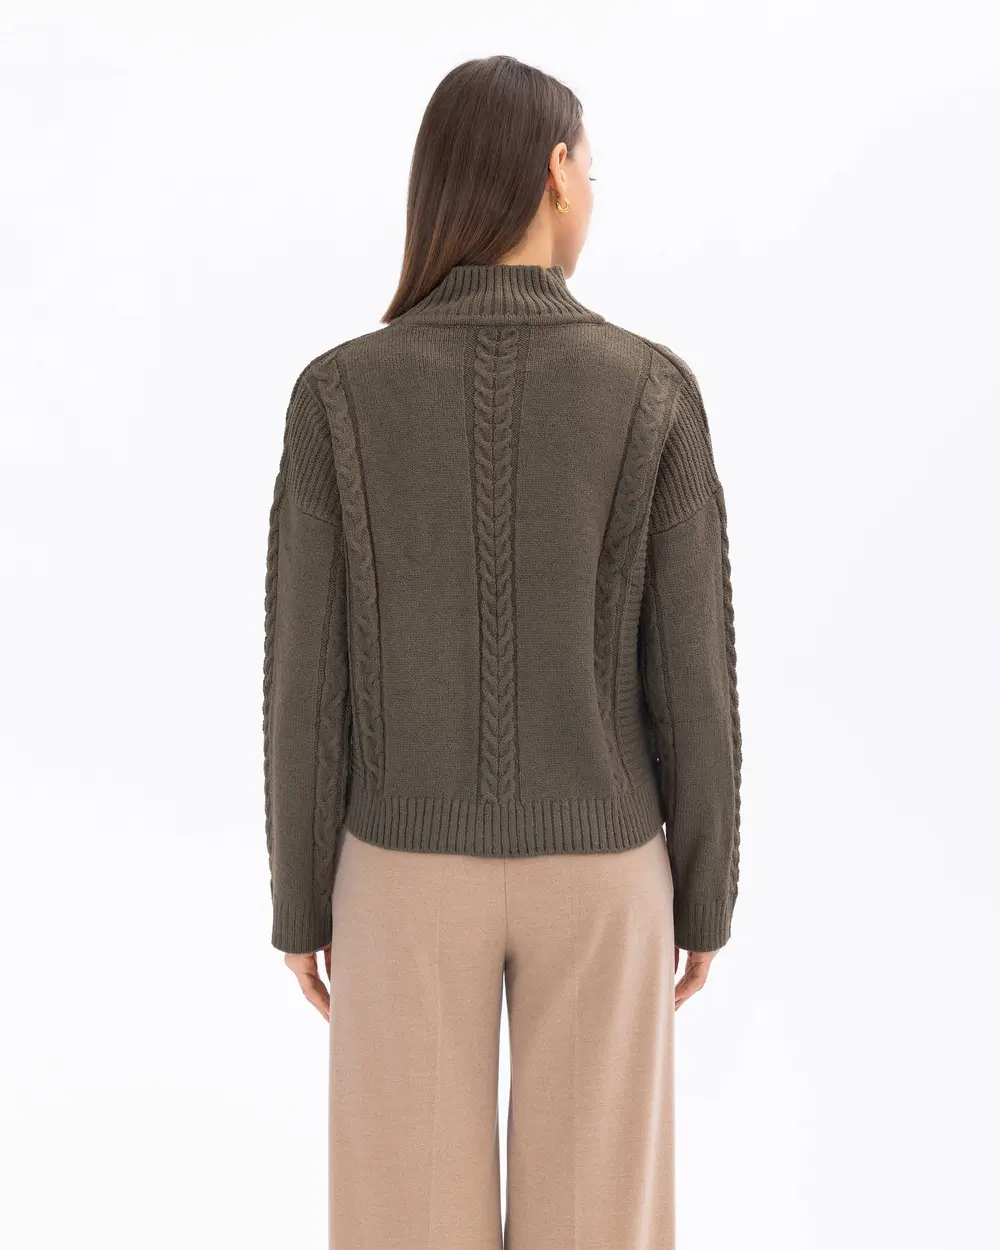 Knitted Detailed High Collar Waist Length Sweater